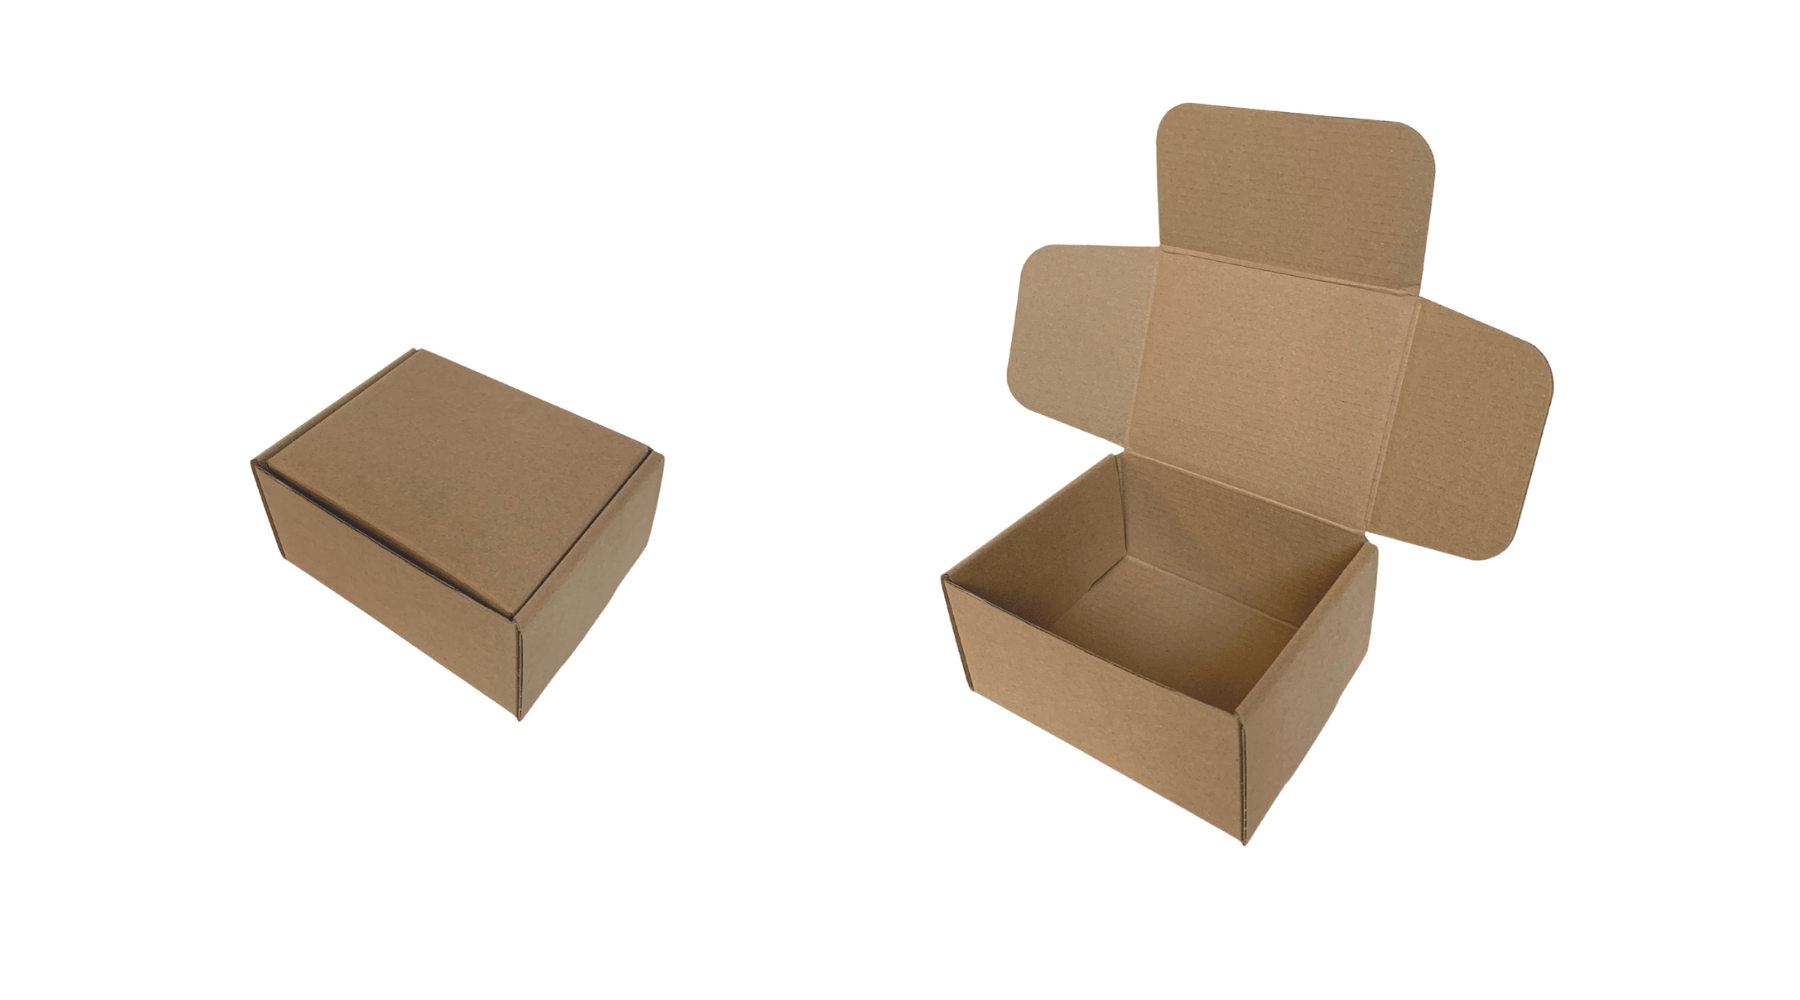 What is a Shipper Box? - Happy Box